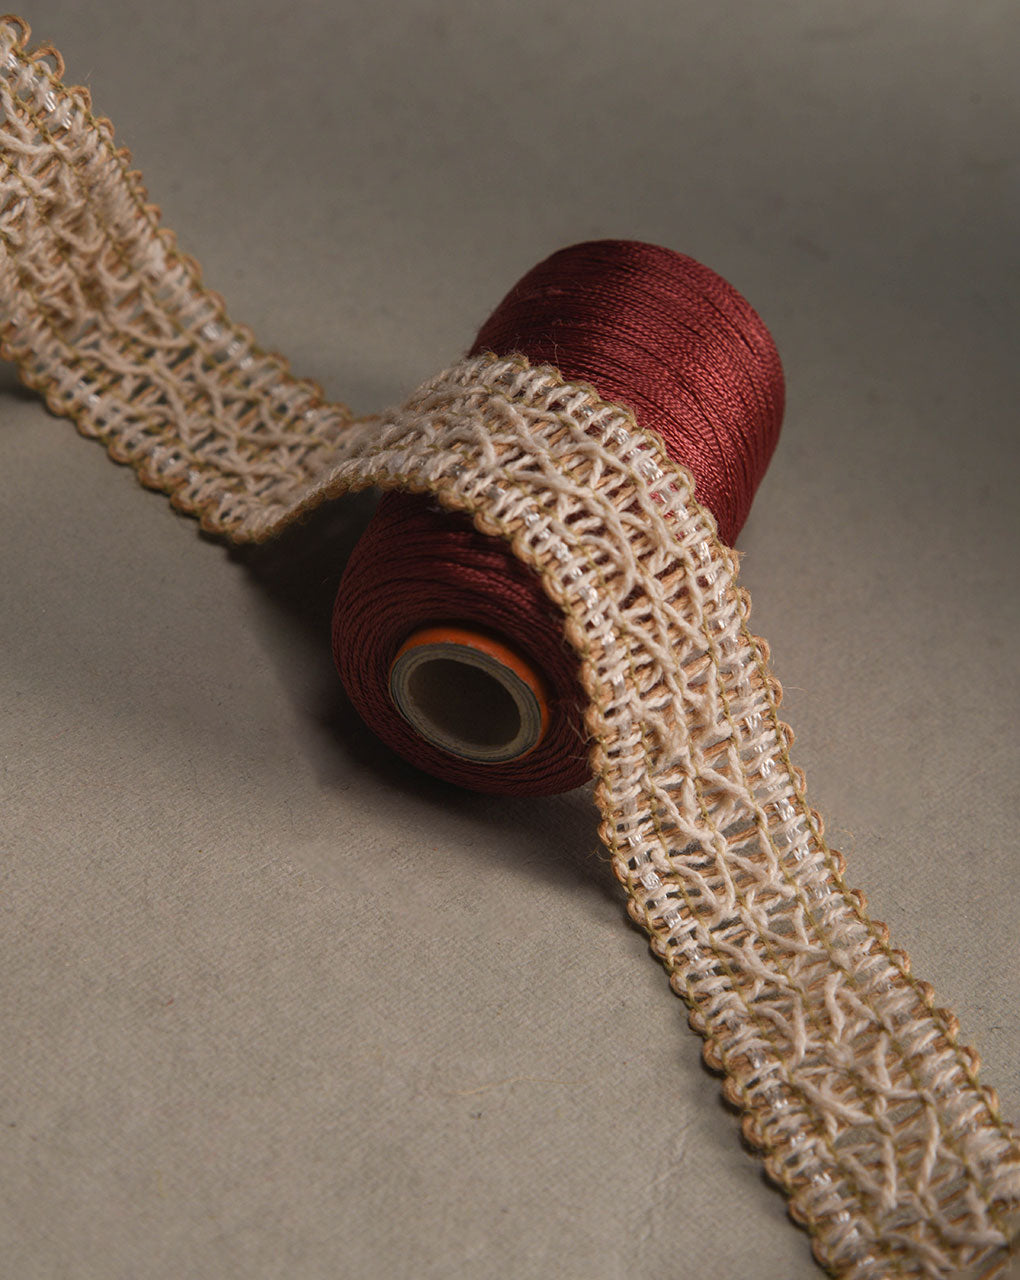 Geometric Patterned Woven Cotton Jute Lace - Fabriclore.com